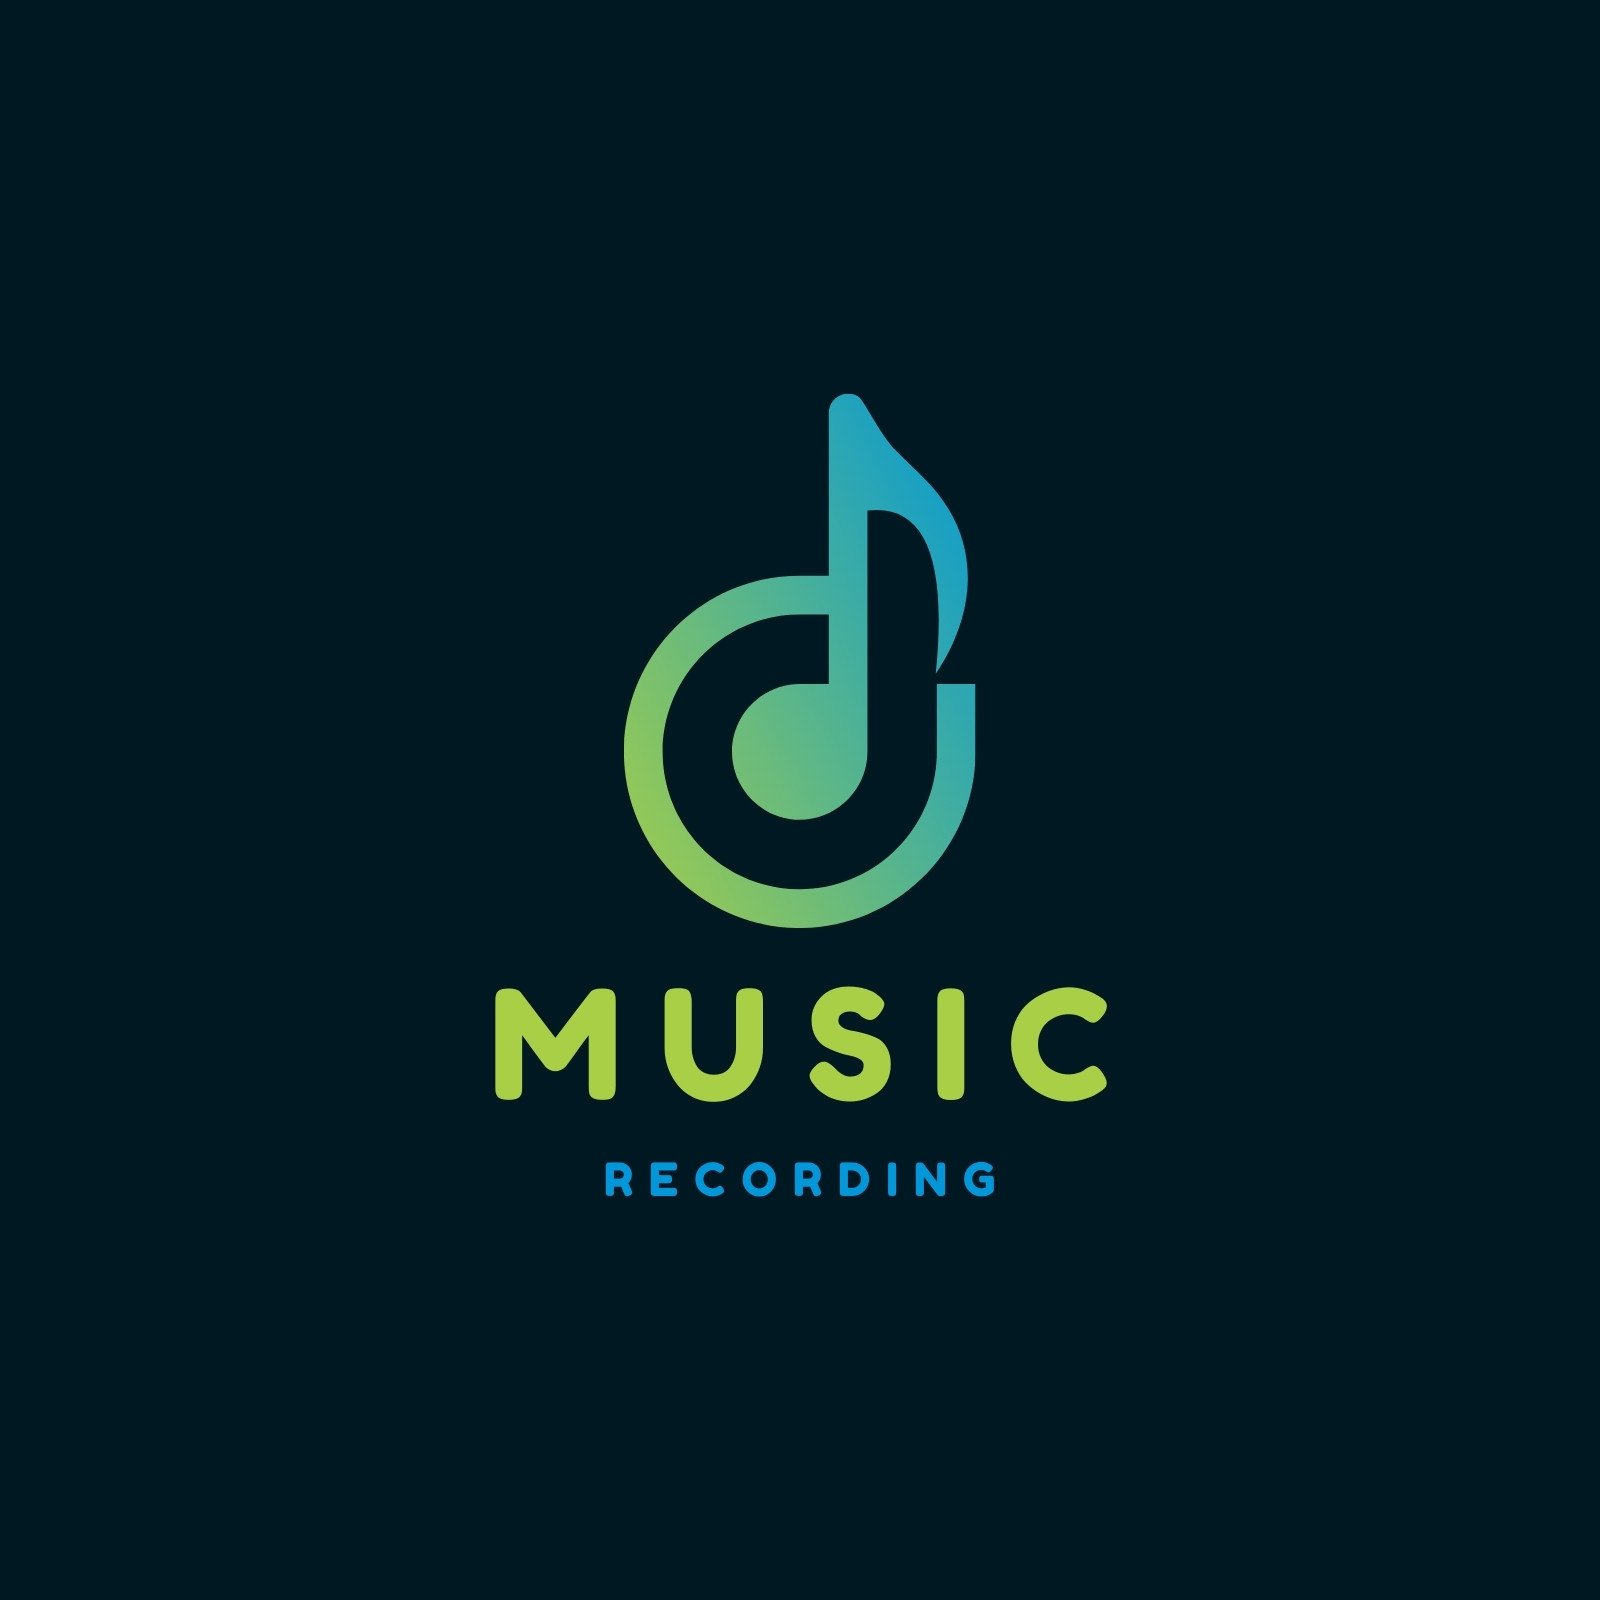 Free printable music logo templates | Canva